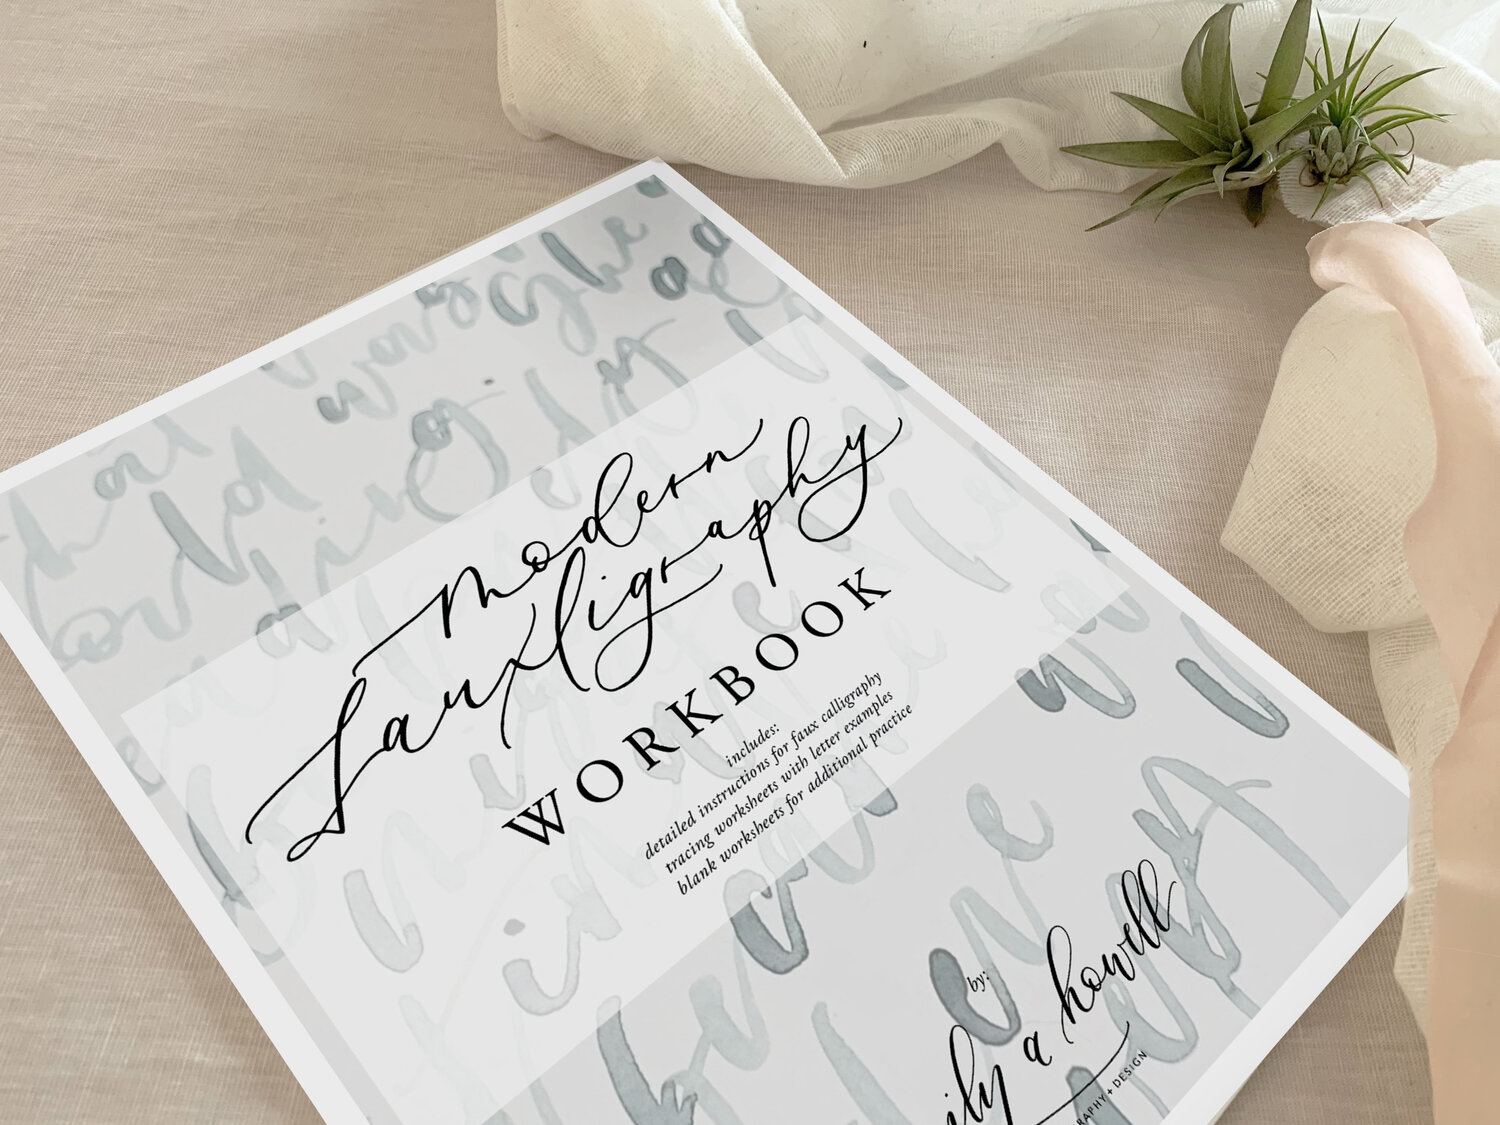 Monoline Calligraphy Lettering WorkBook – Bleed Kreative